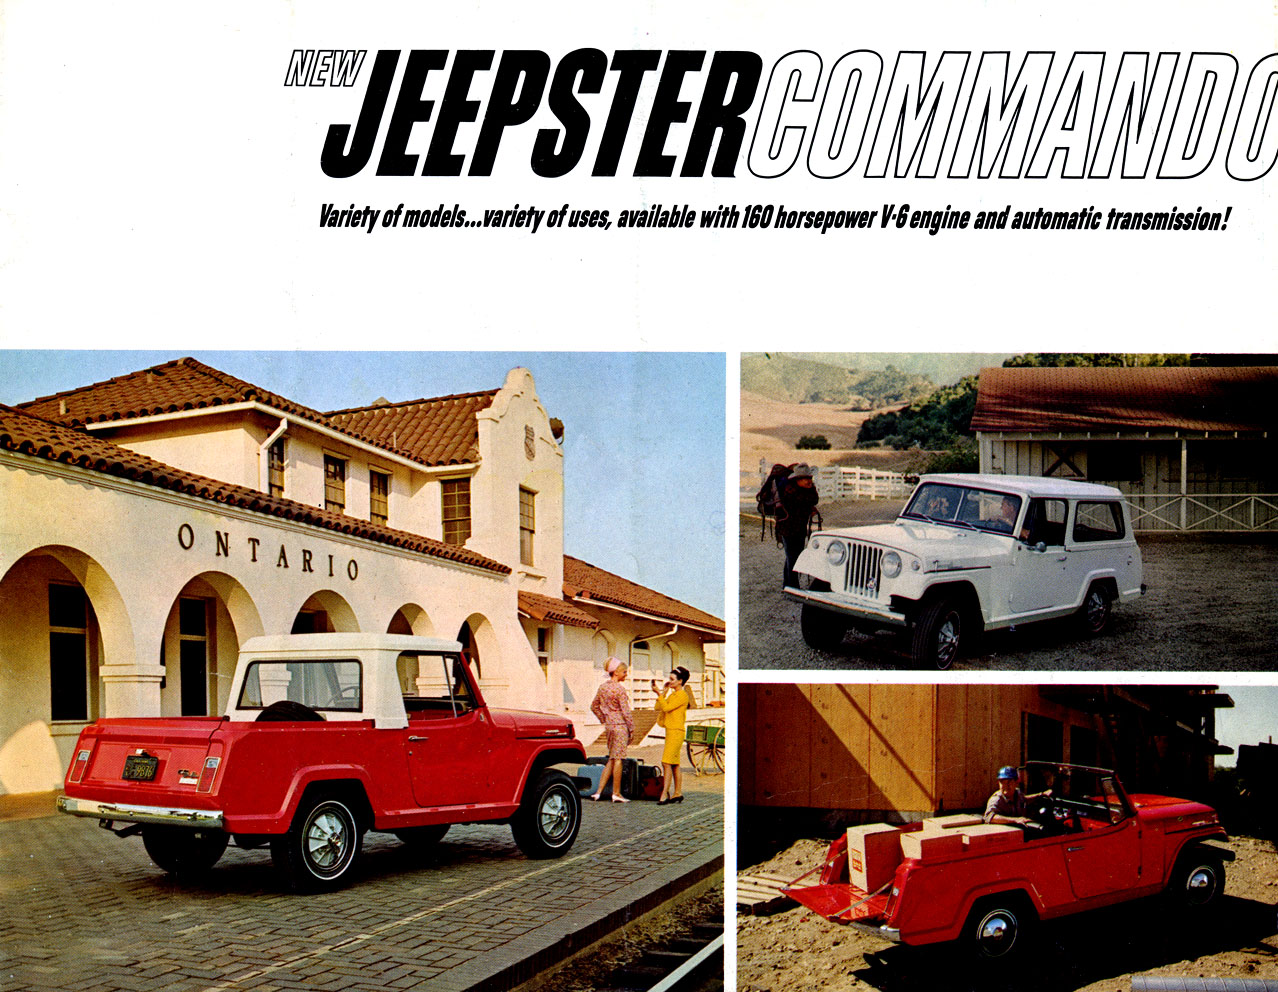 1966 Jeepster Commando Brochure